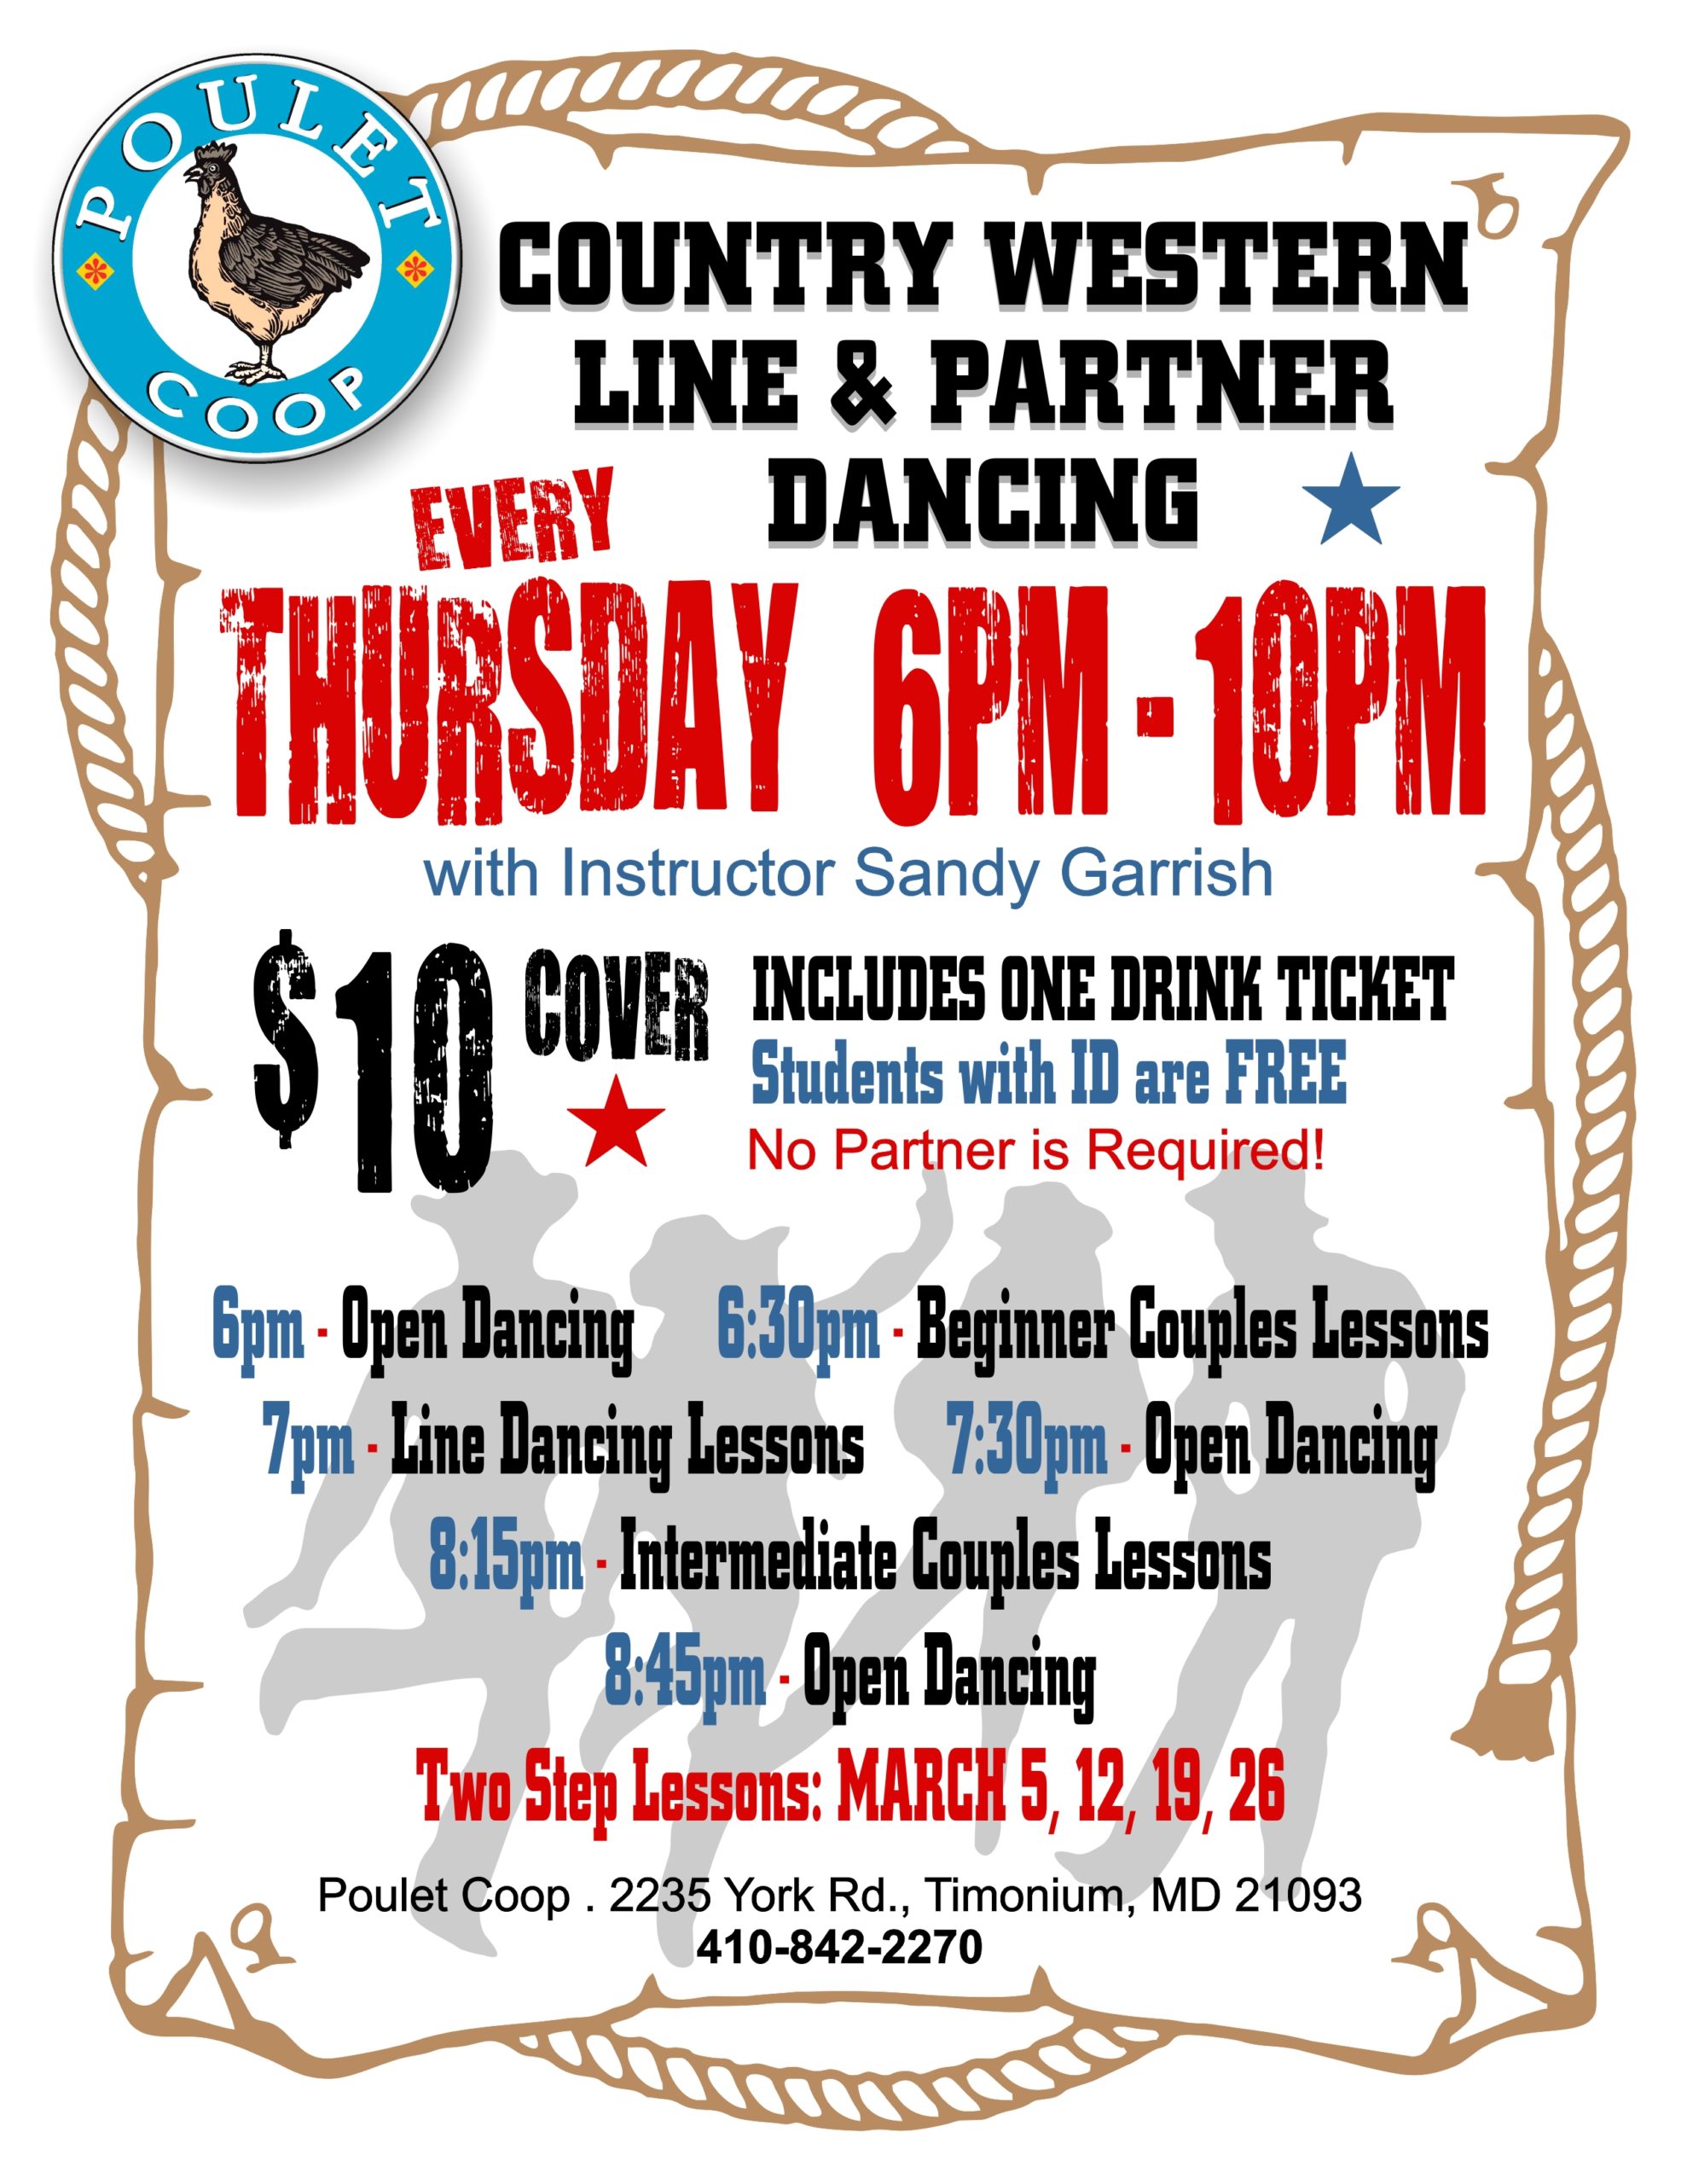 Country Western Line & Partner Dancing event flyer